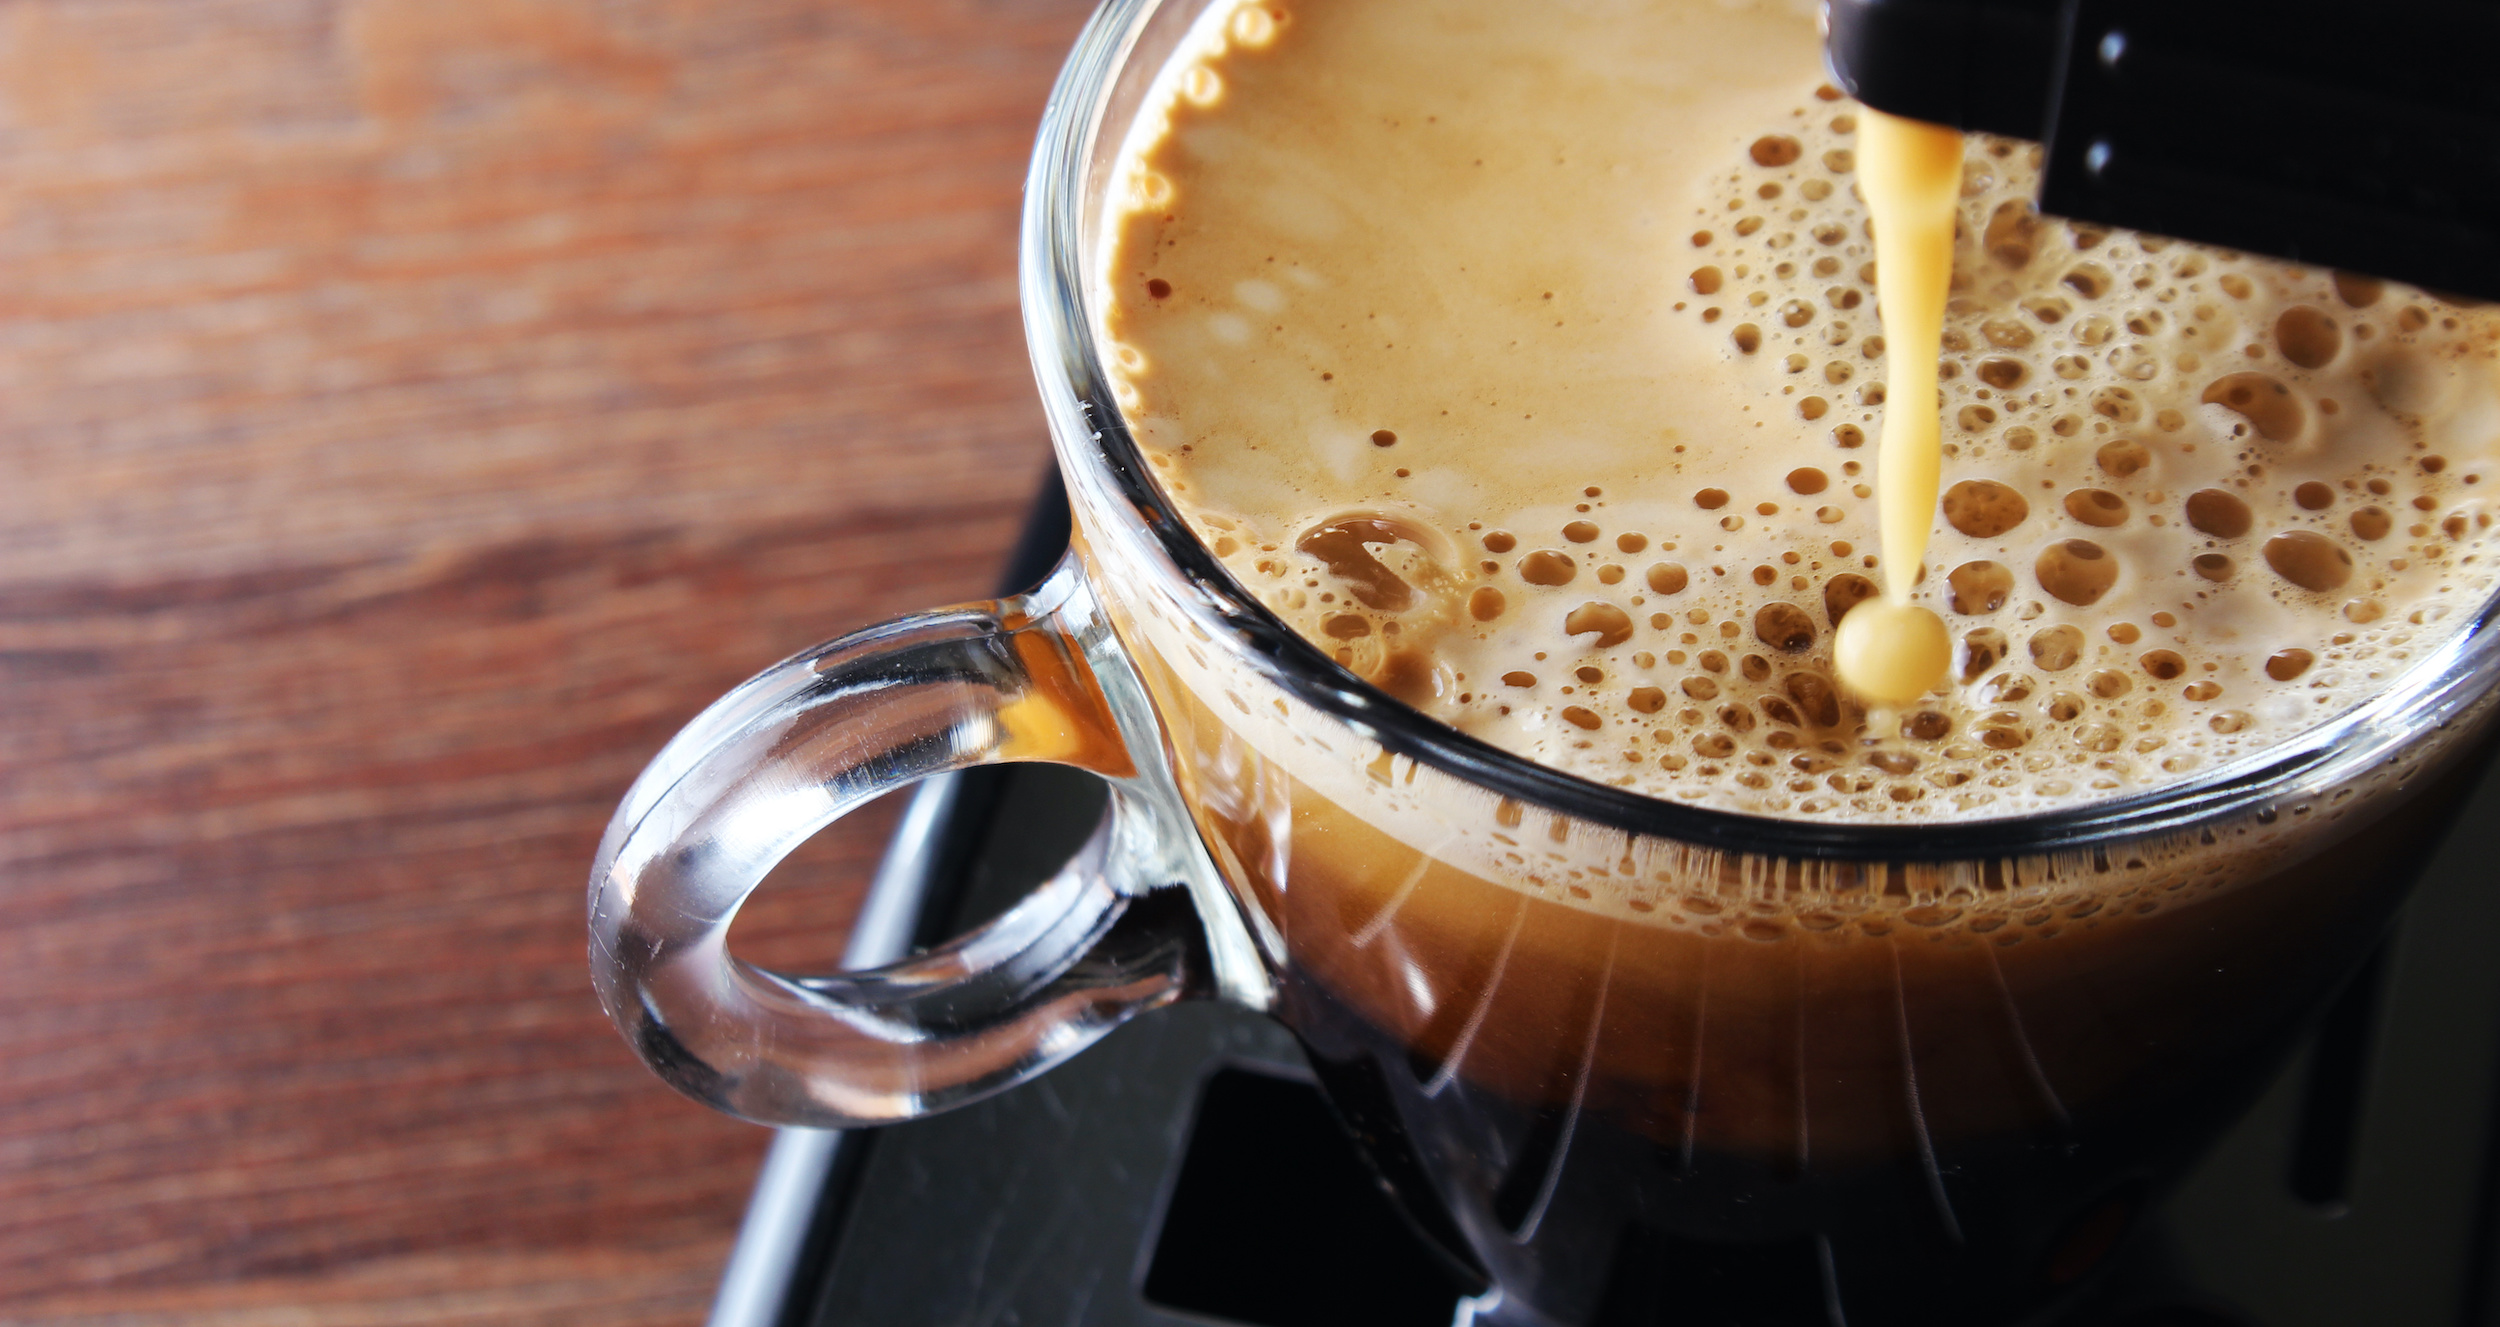 Modern Break Room Solutions San Antonio | Single Cup Brew Coffee | Refreshment Equipment